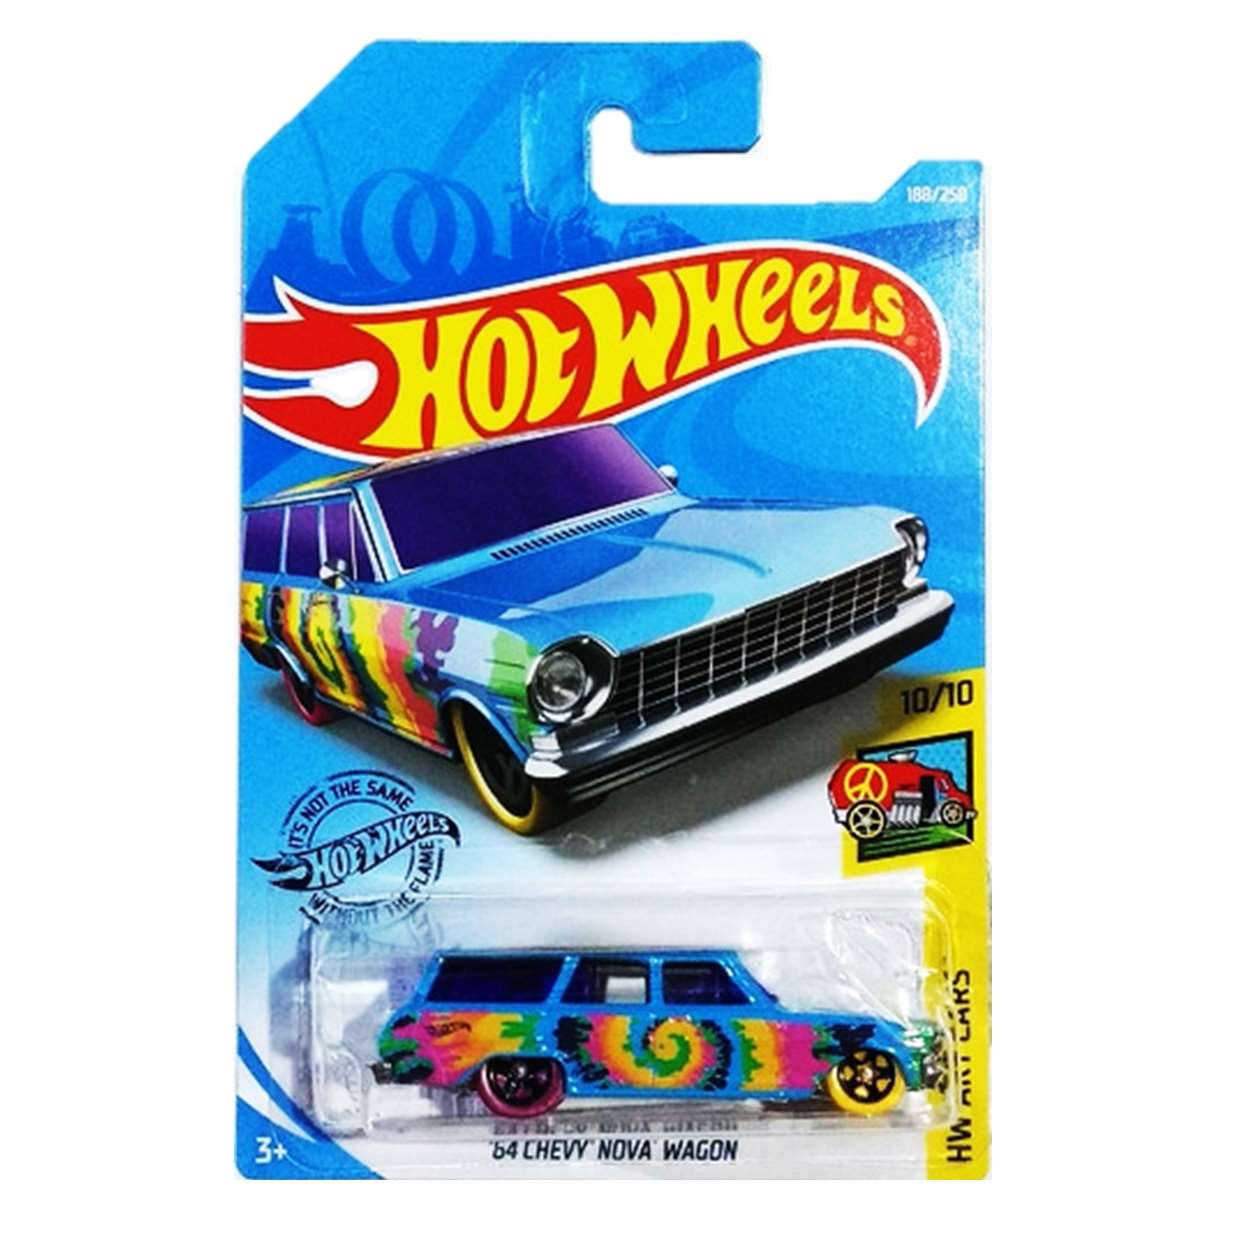 64 Chevy Nova Wagon 10/10 Hot Wheels Hw Art Cars